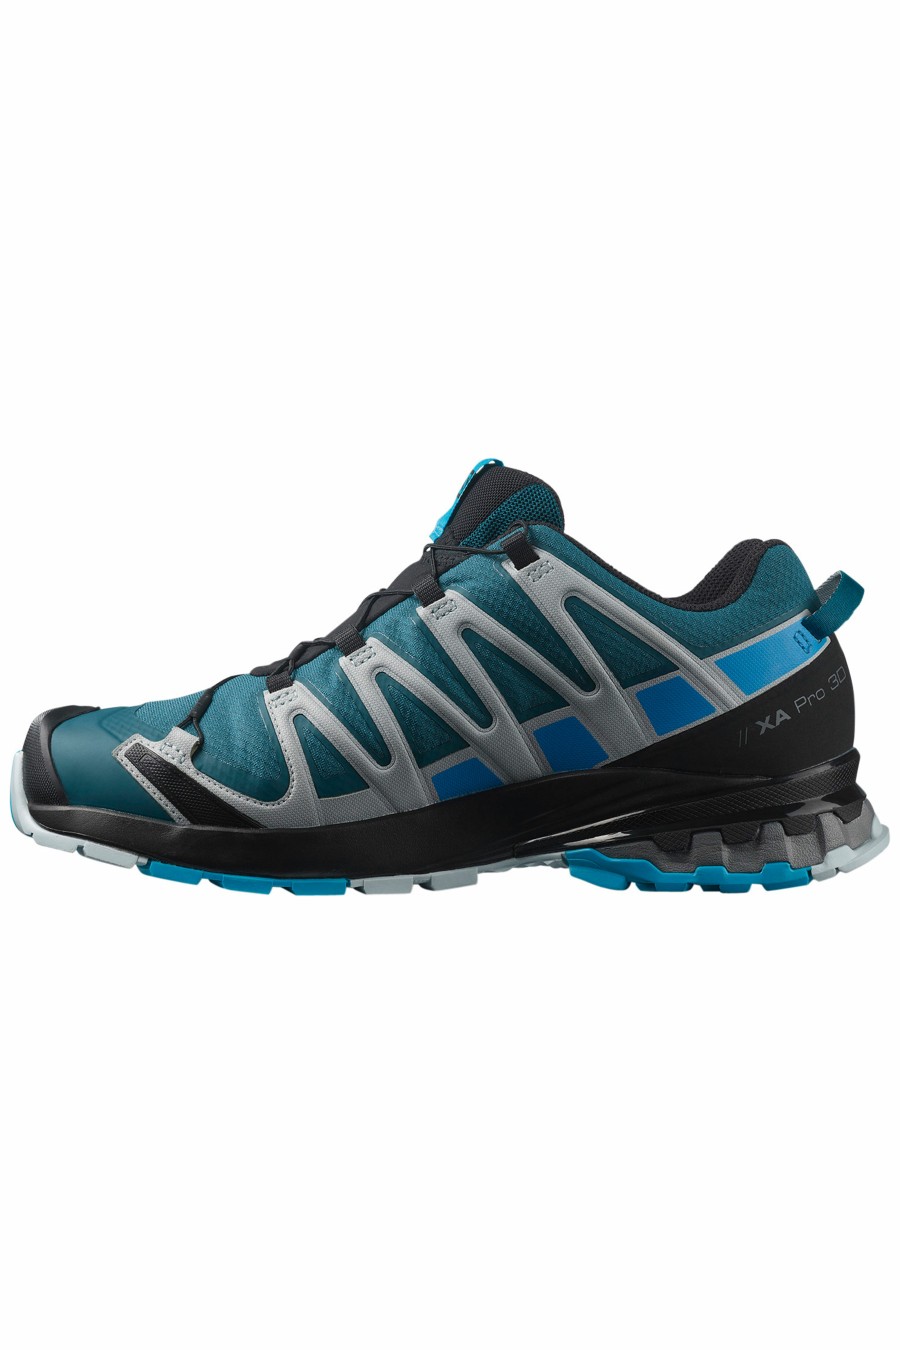 Mens Macpac Trail Running Shoes | Salomon Men'S Xa Pro 3D V8 Gtx Trail ...